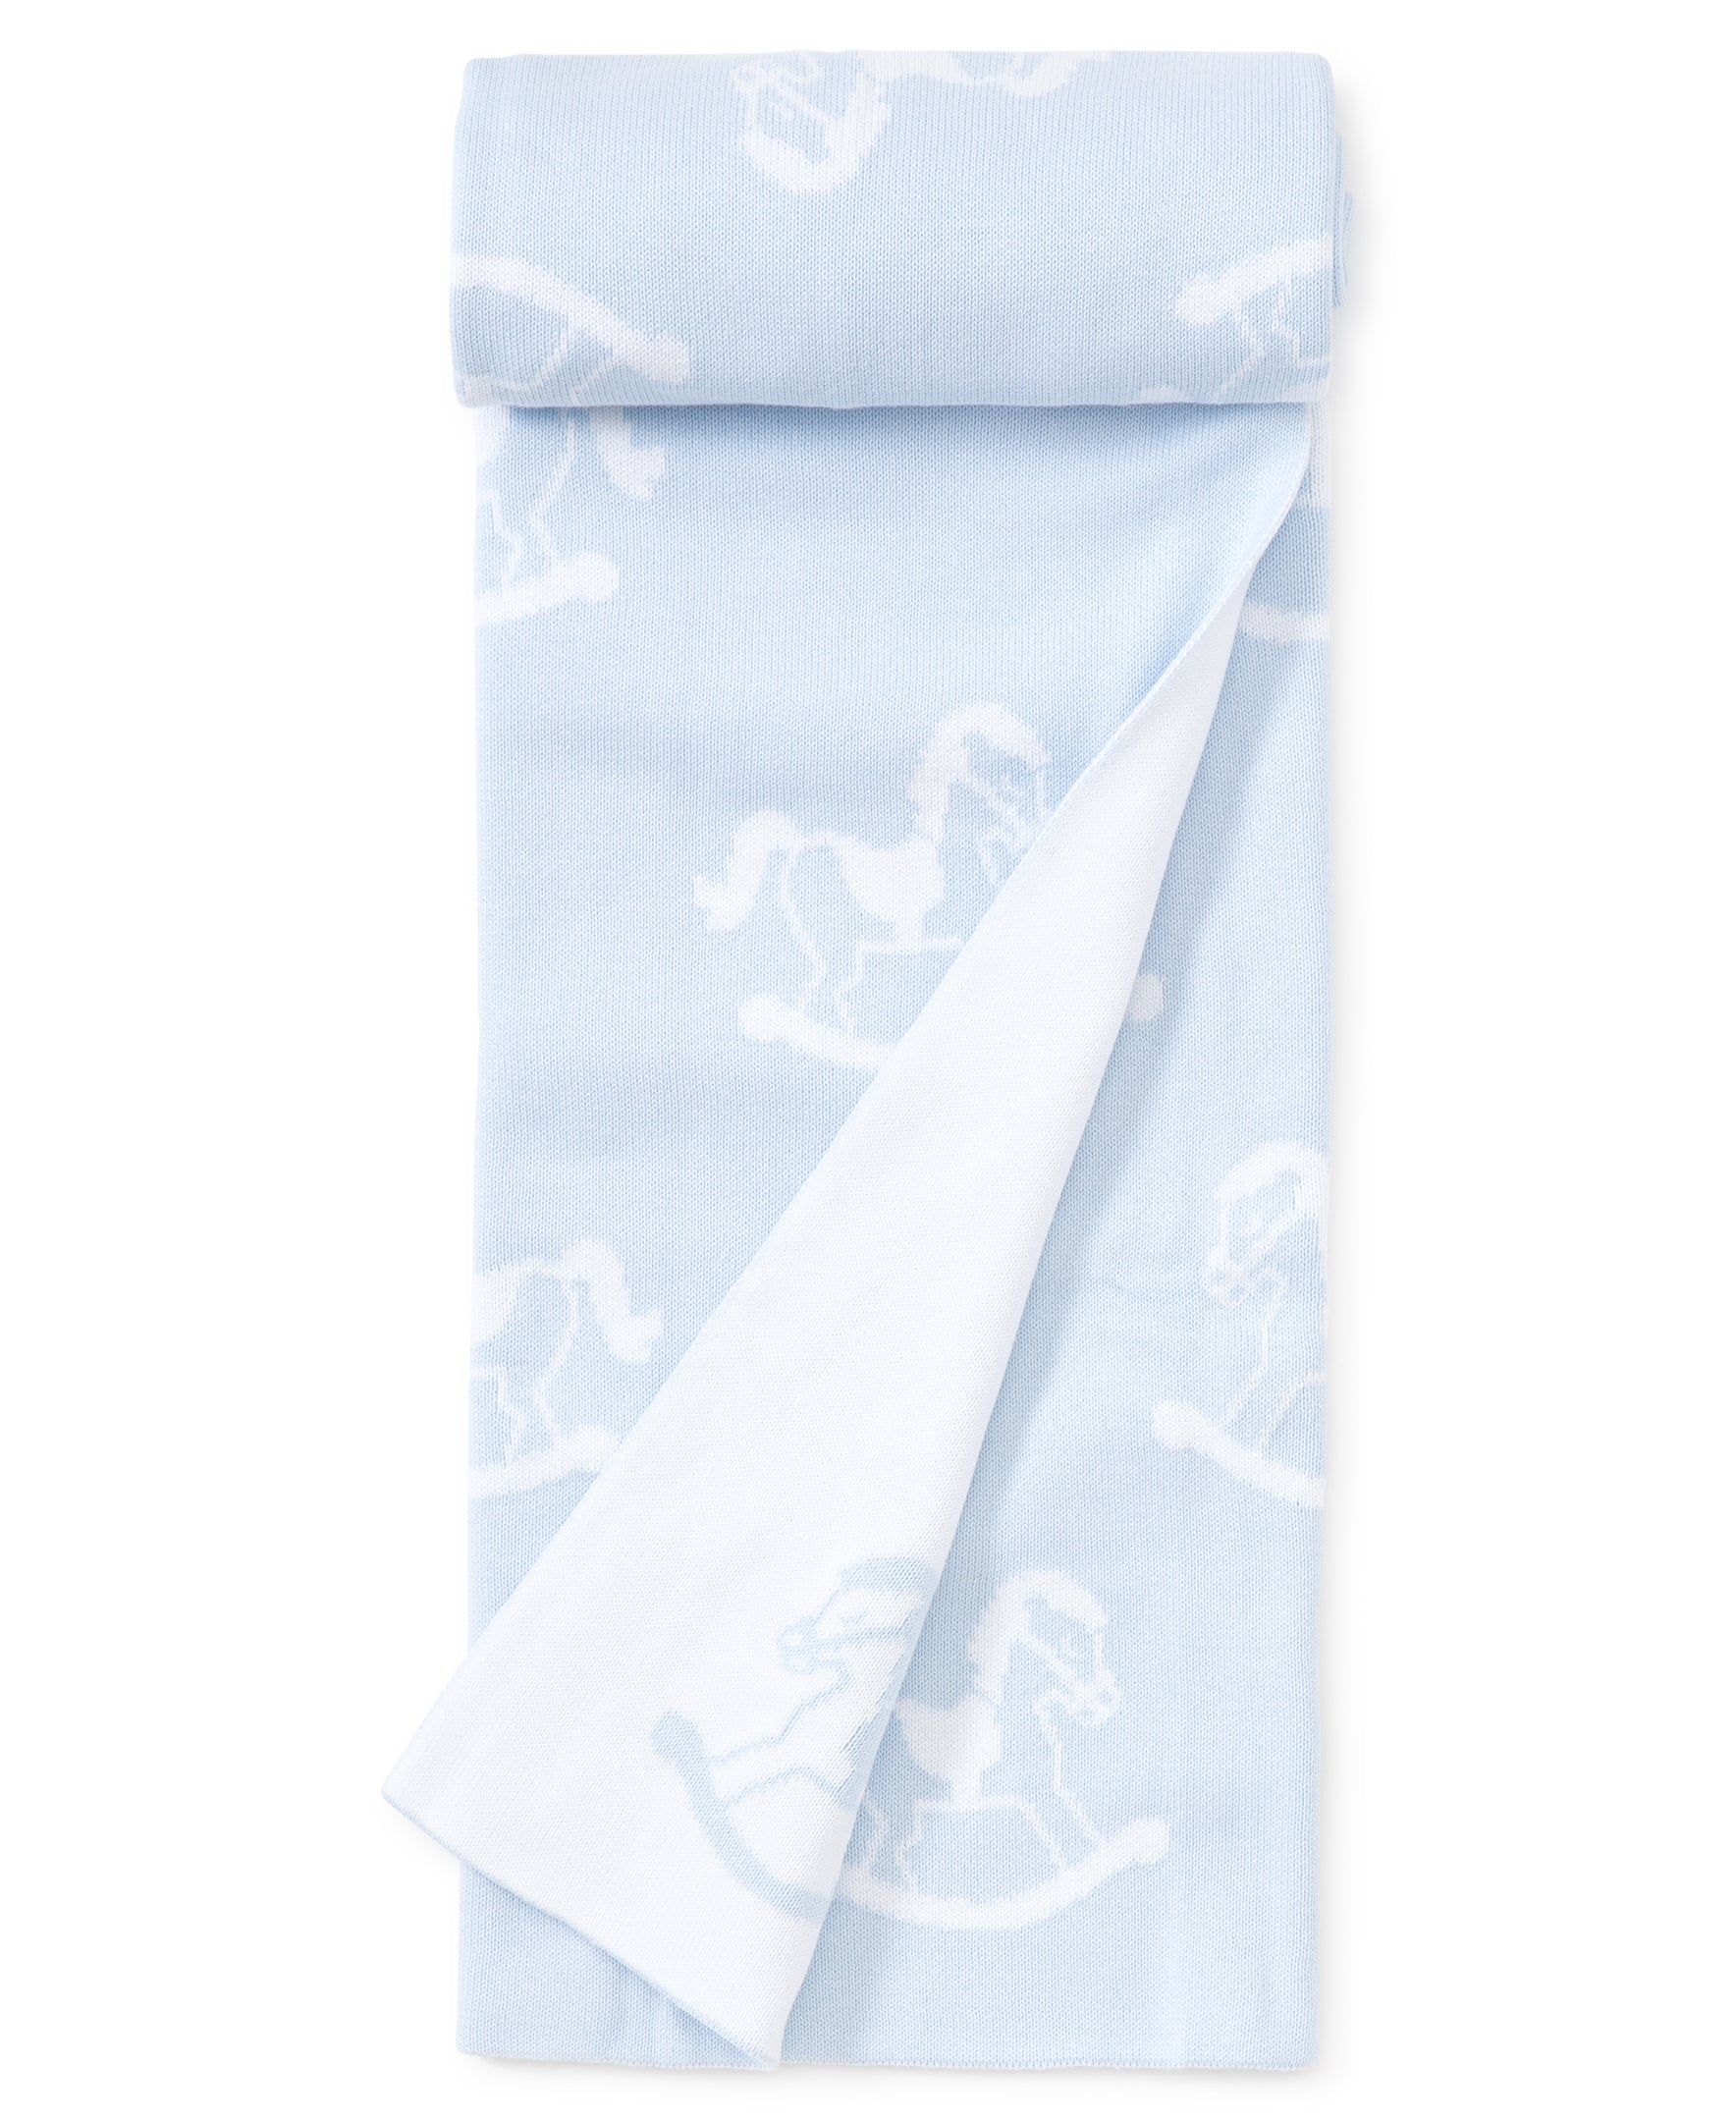 Blue Rocker Knit Novelty Blanket - Kissy Kissy